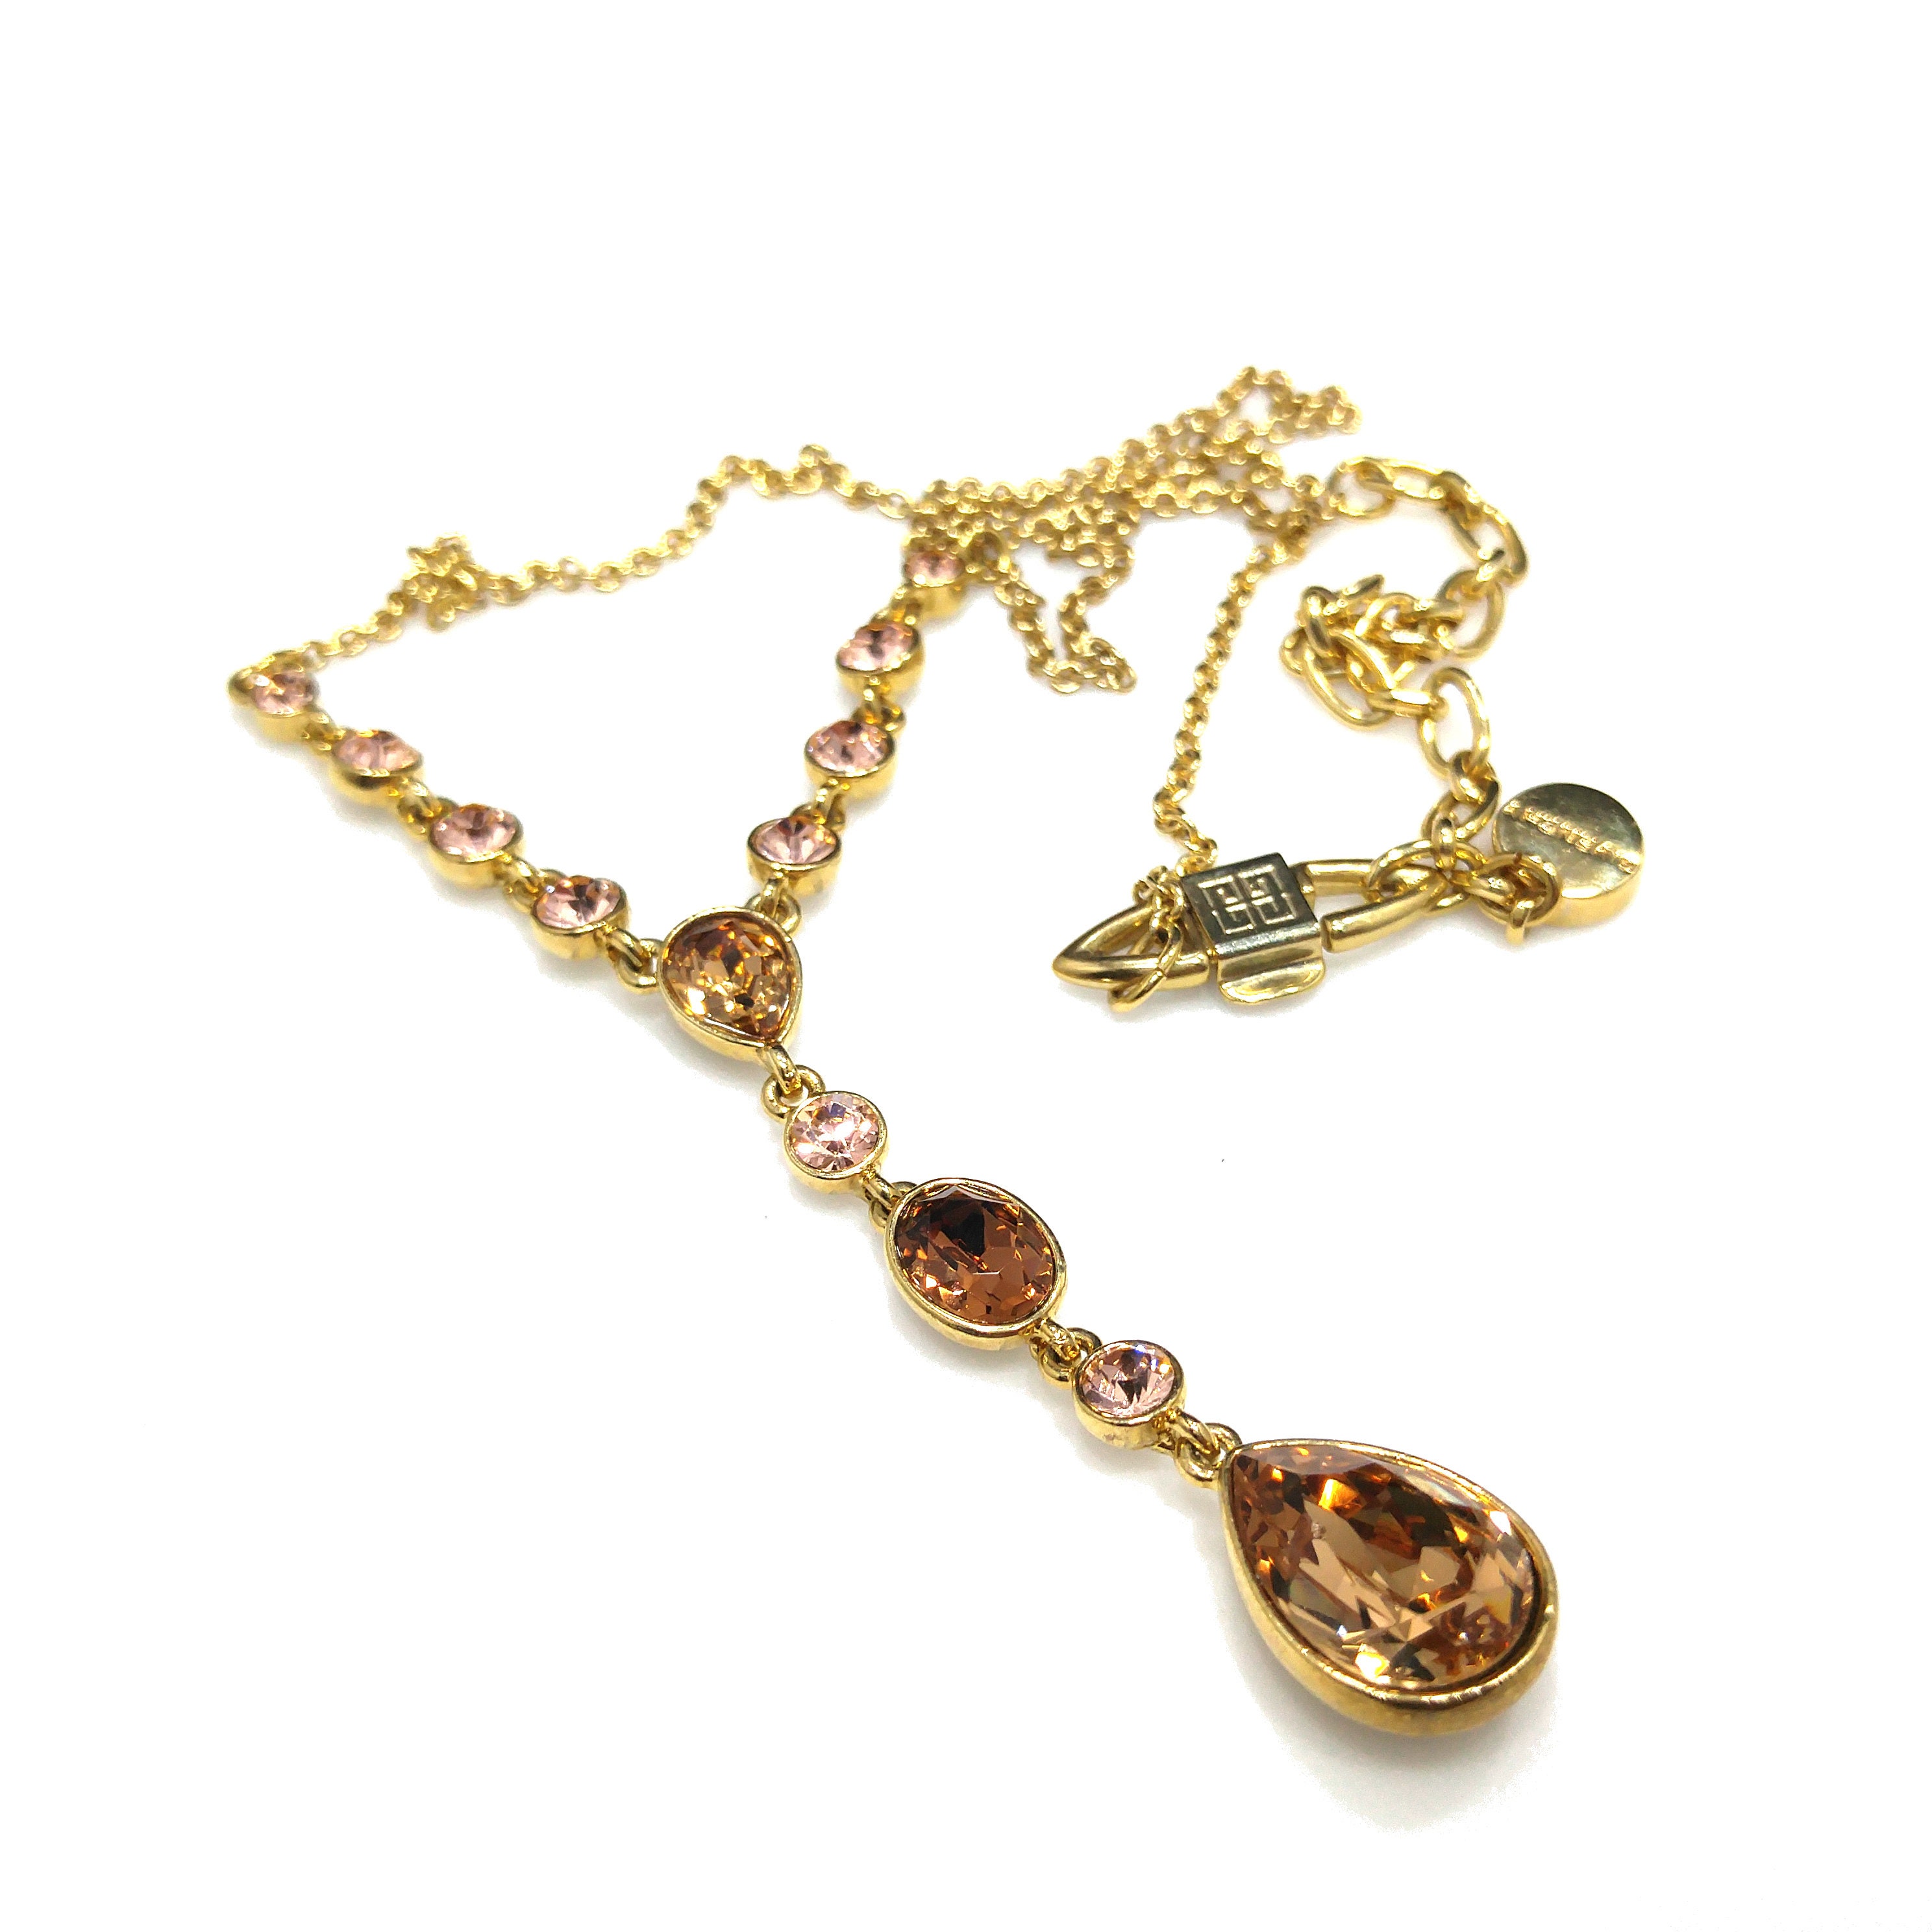 Gold rhinestones necklace - 19,90 €